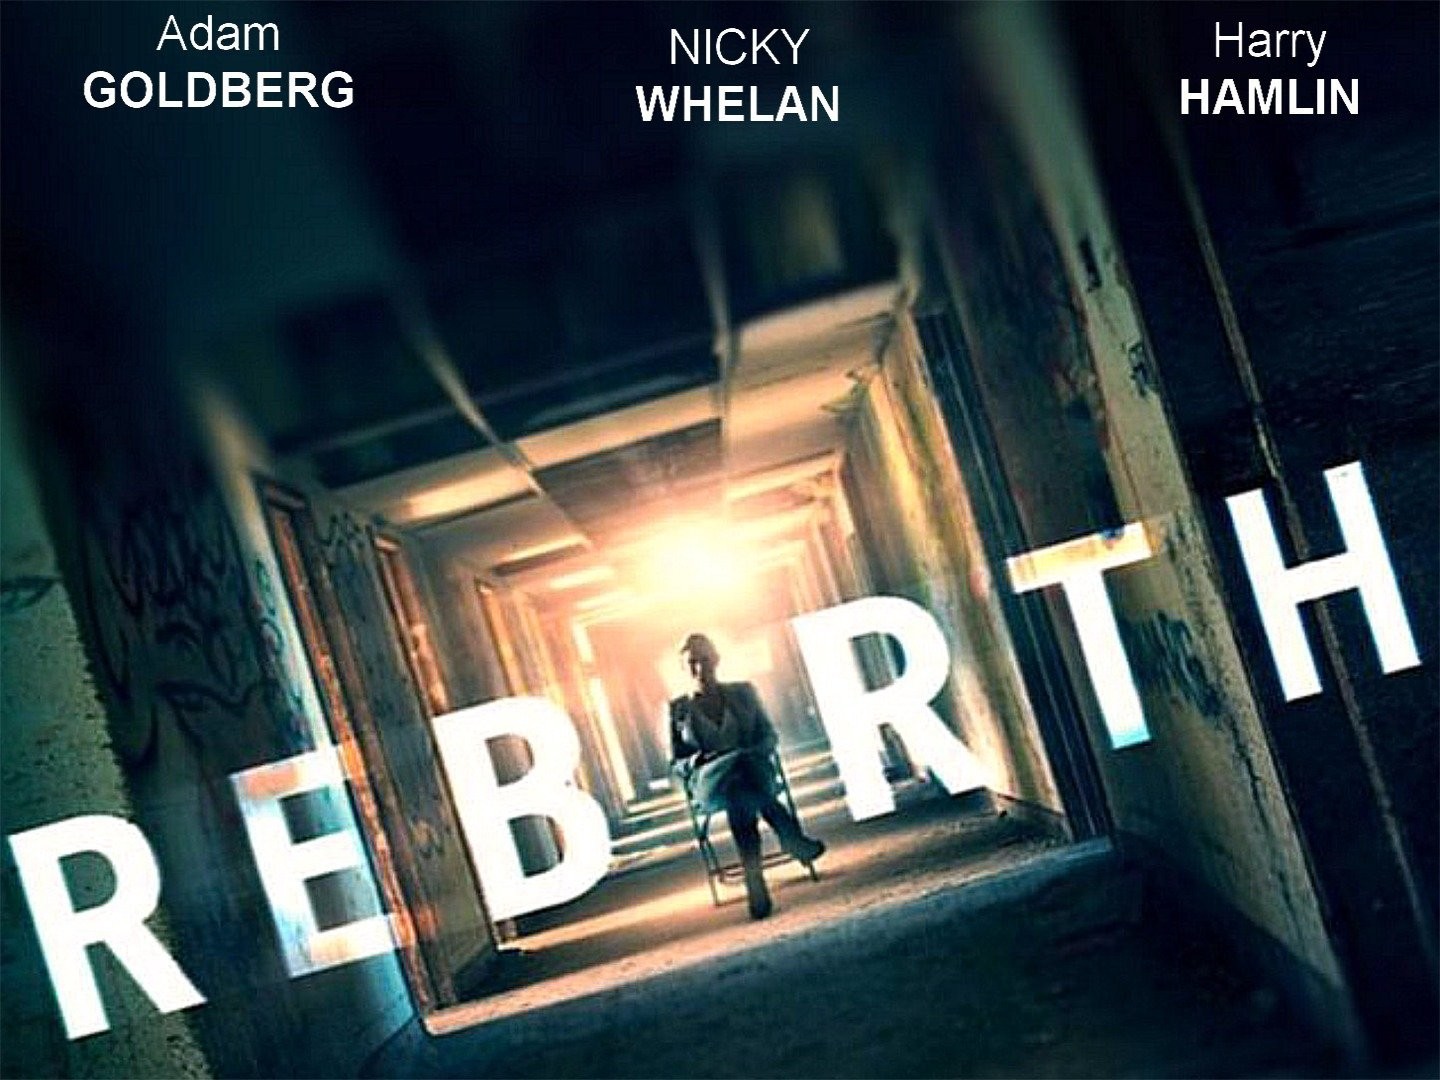 Rebirth - Rotten Tomatoes